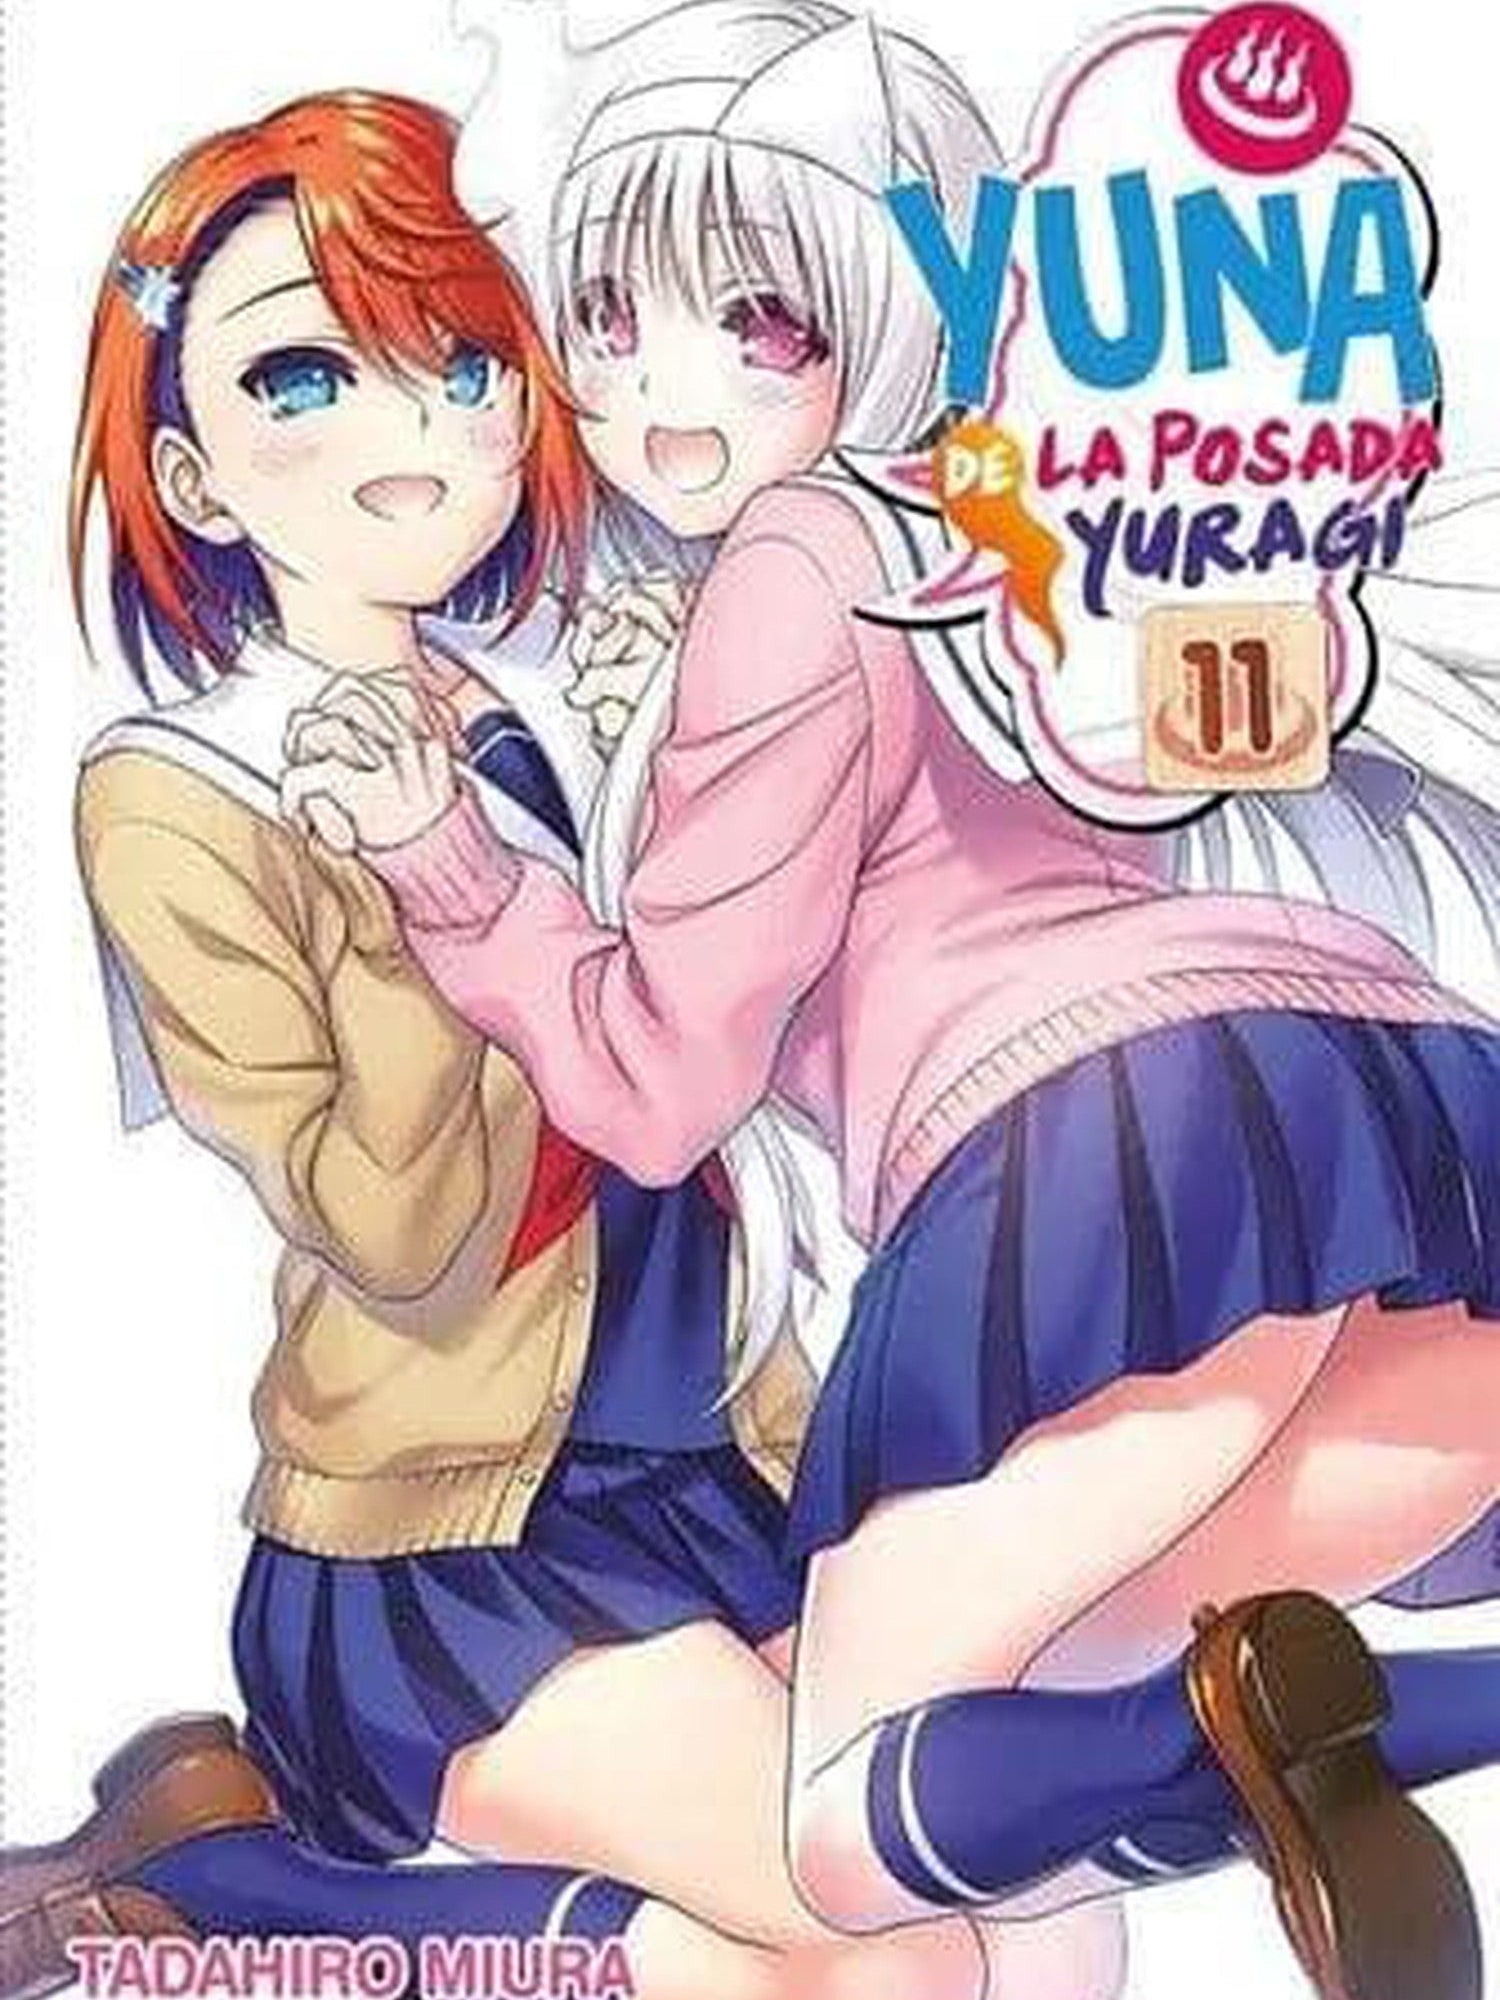 Yuna de la Posada Yuragi #11